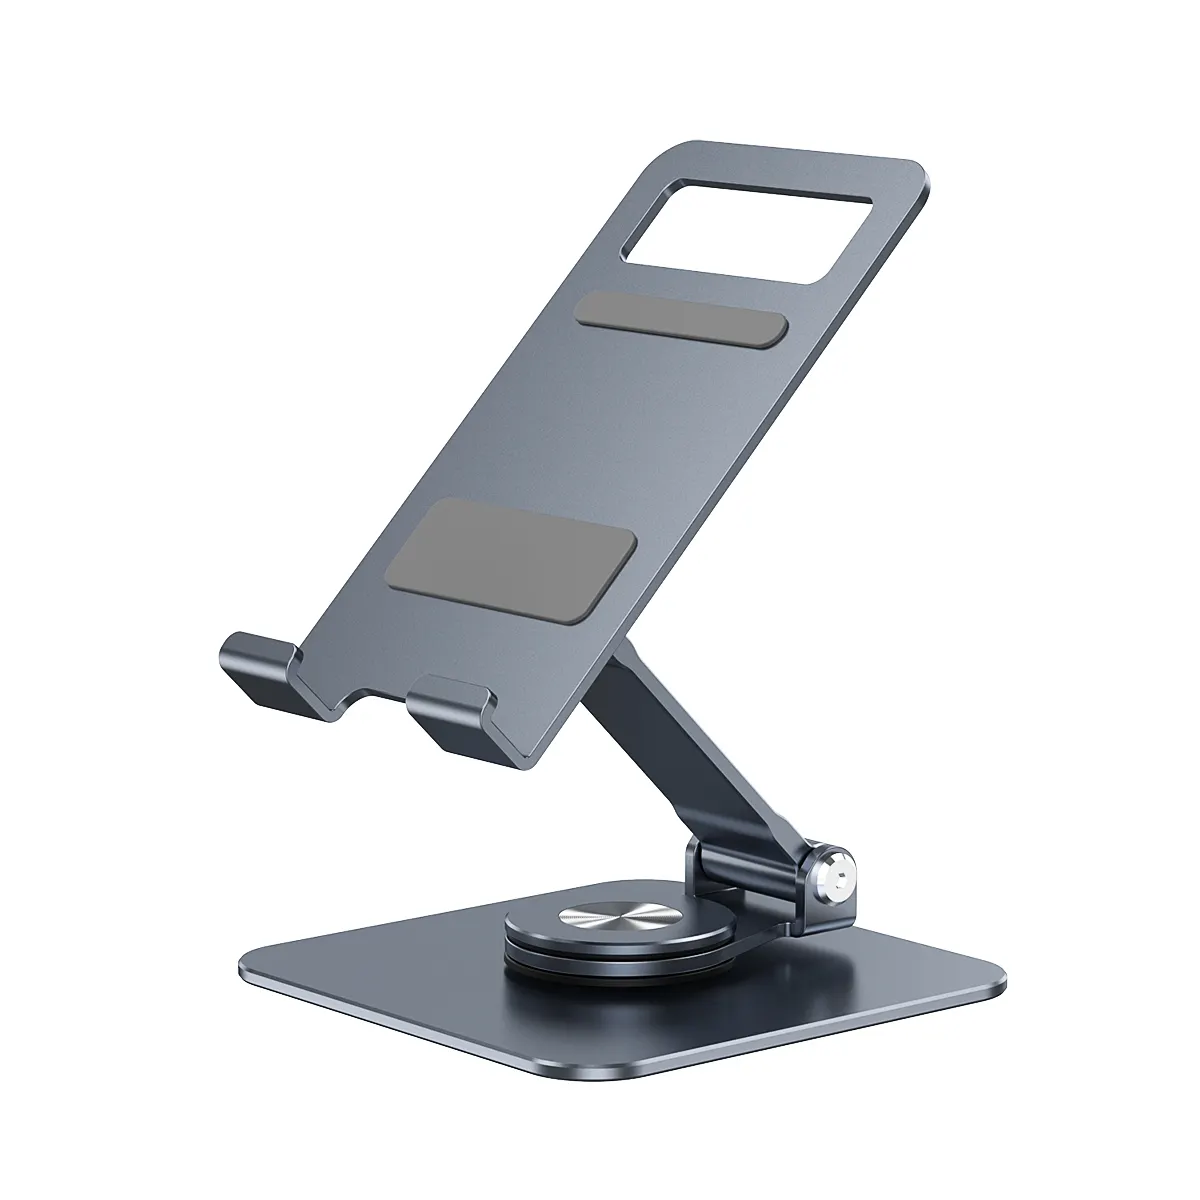 Stand tampilan Tablet logam berputar Desktop 360, dudukan meja lipat bahan Aloi Aluminium untuk semua ponsel